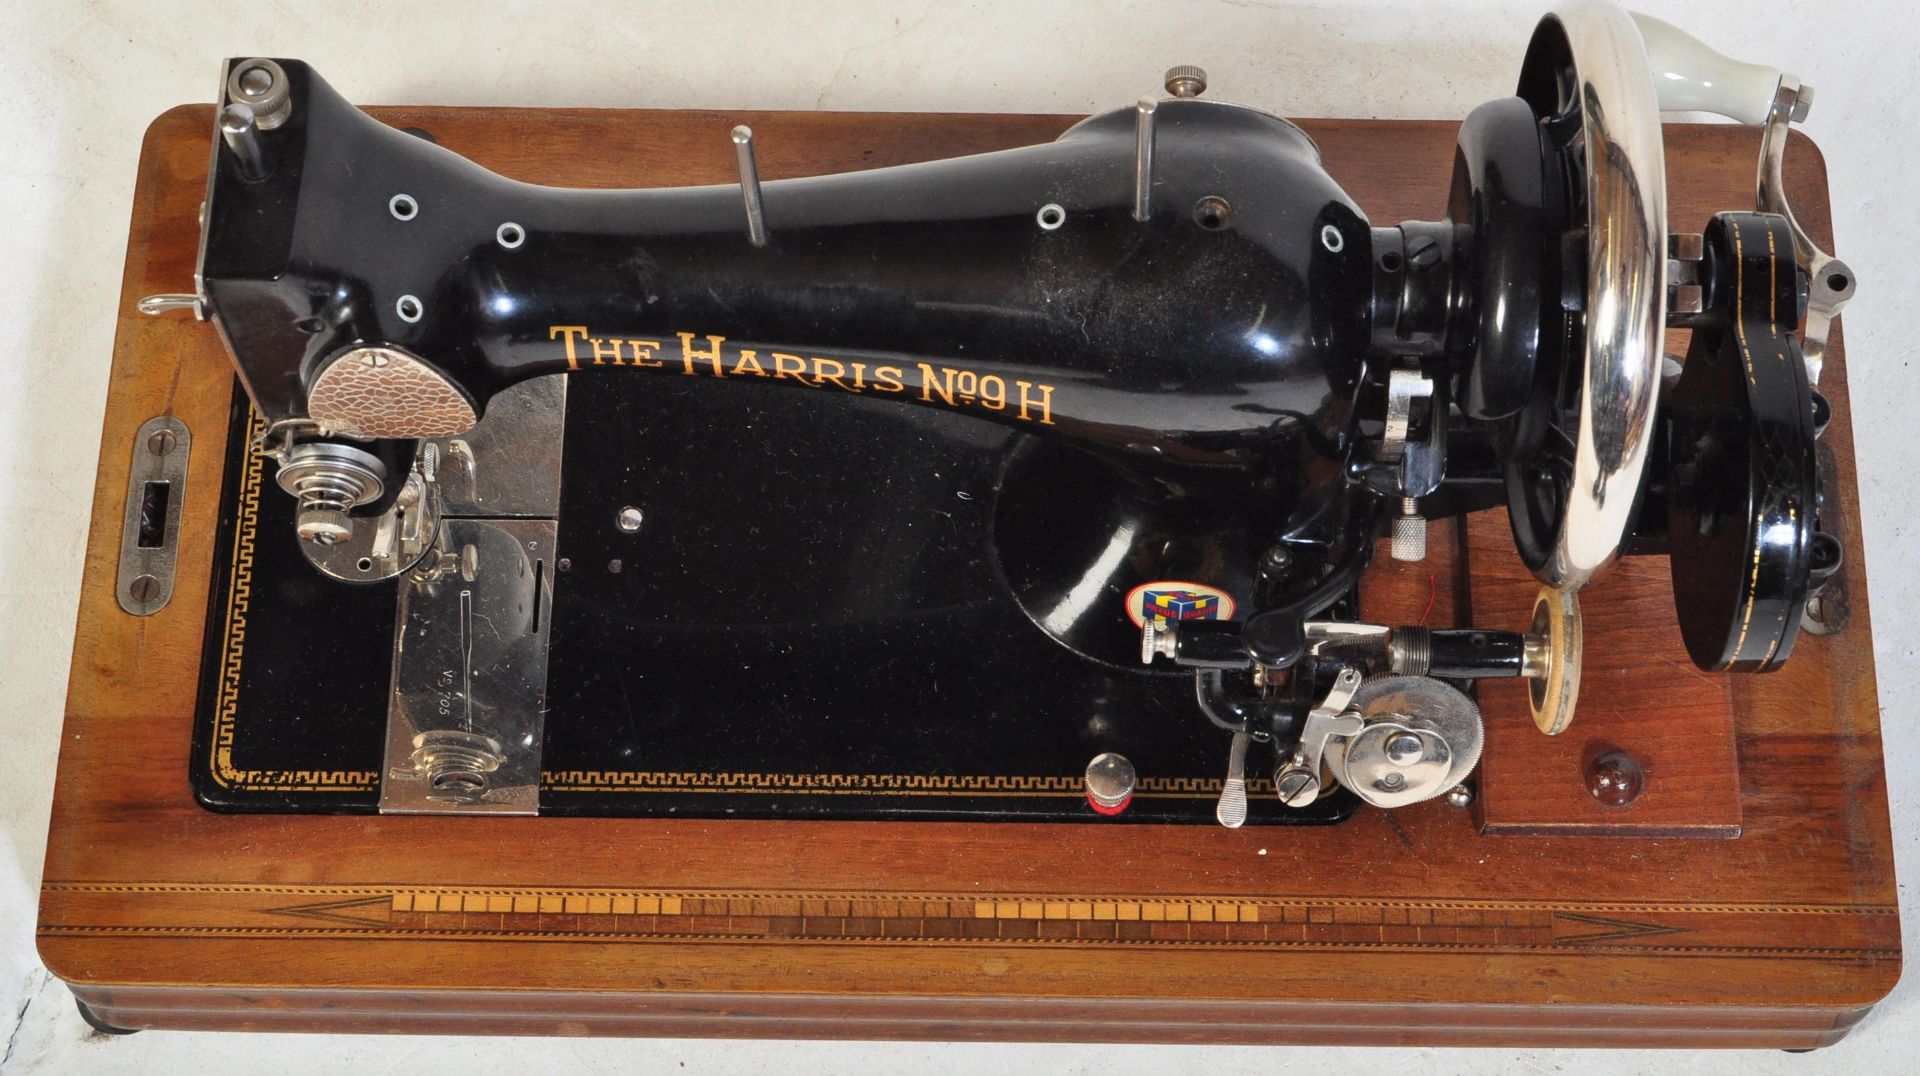 VINTAGE 'THE HARRIS N.9H' TRAVELLING SEWING MACHINE IN CASE - Image 4 of 5